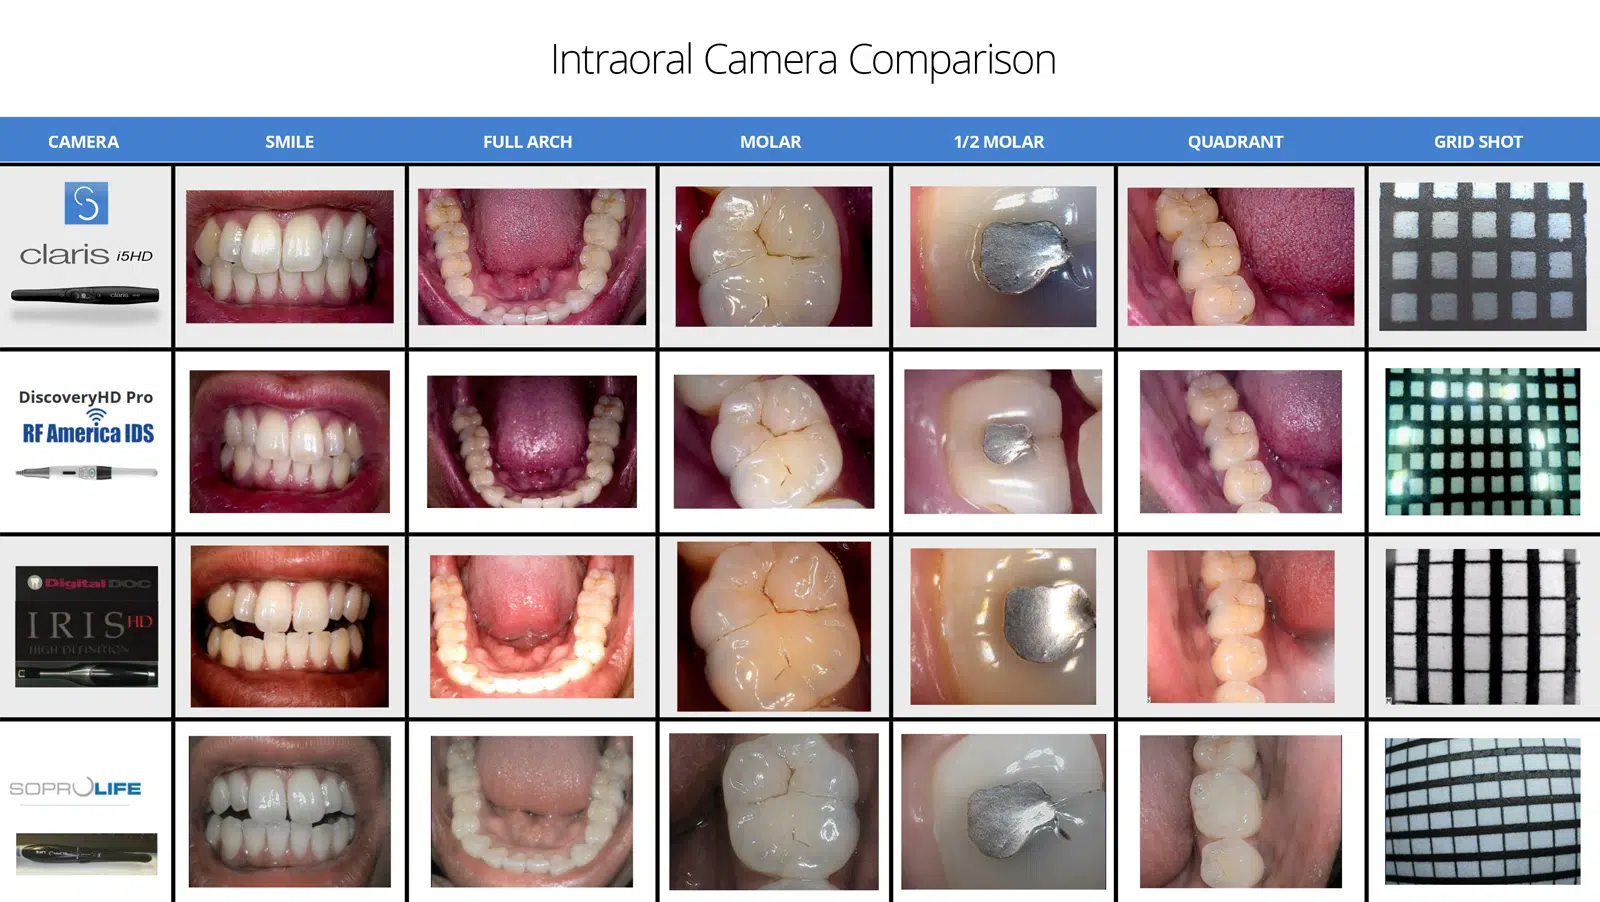 Claris i5HD Dental Intraoral Camera